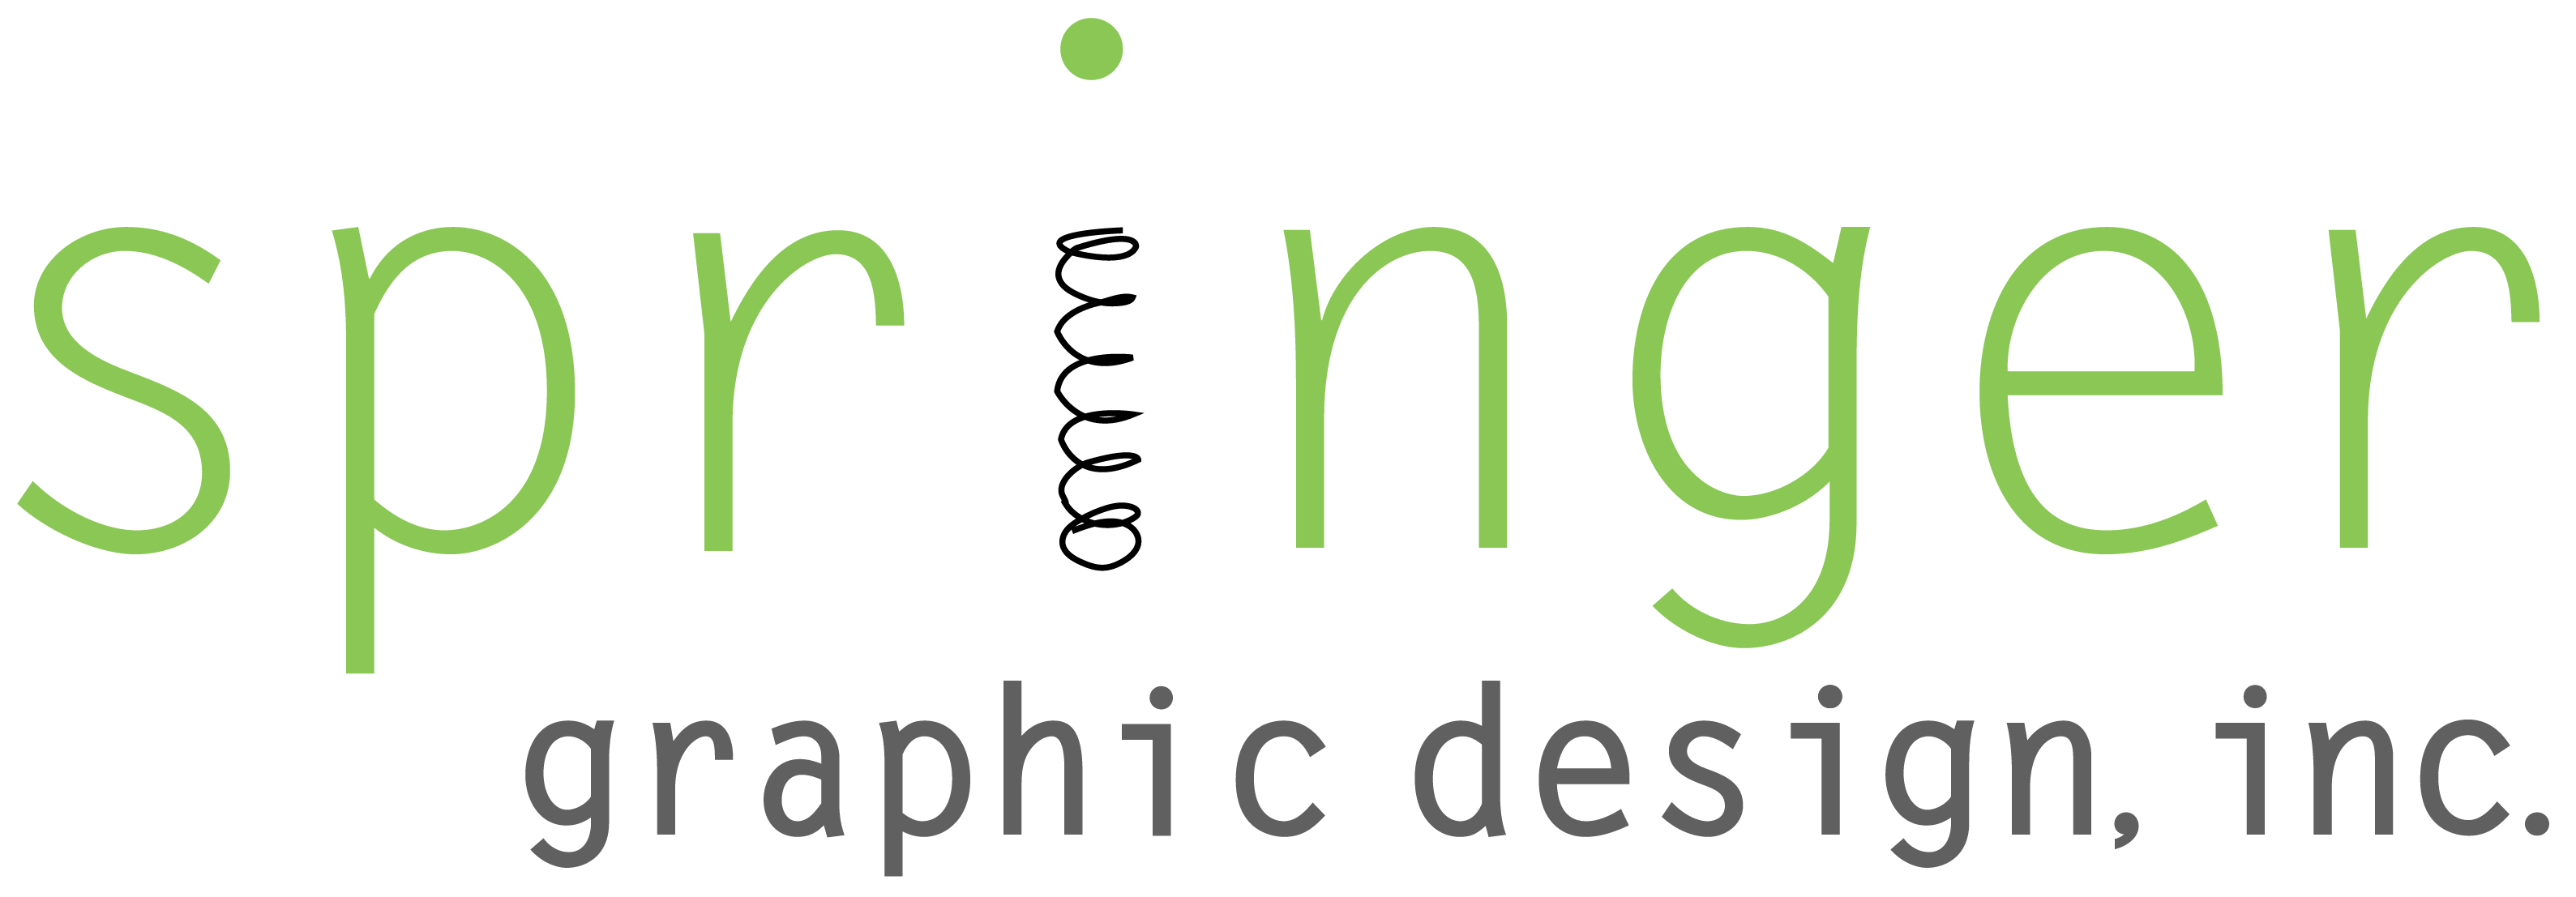 Graphic Design Agency in San Diego | Springer Graphic Design